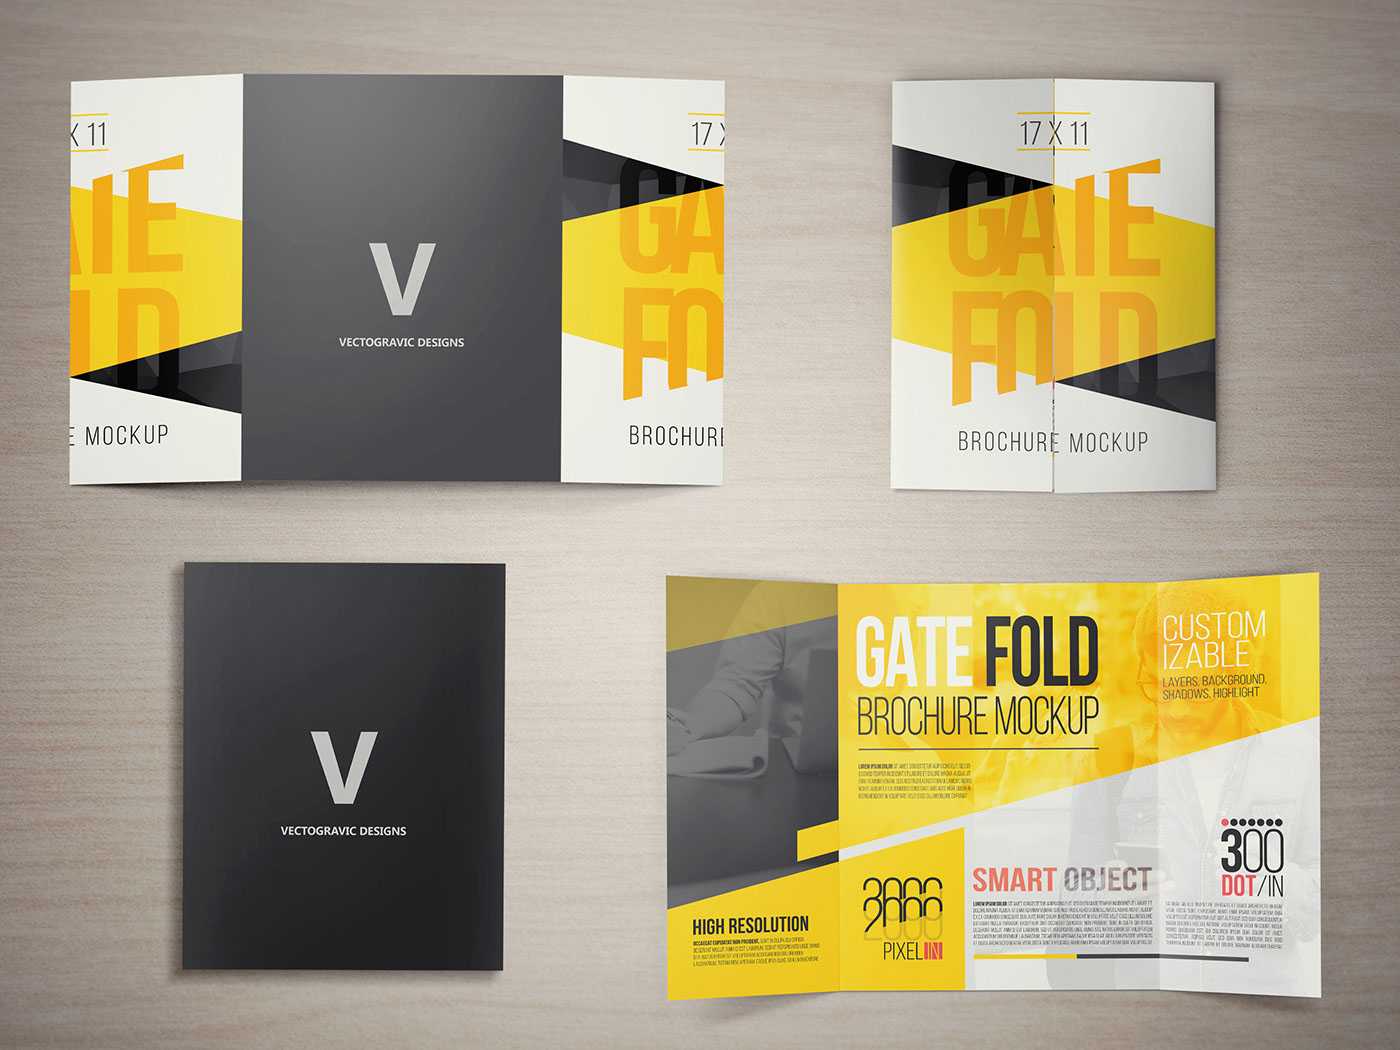 17 X 11 Gate Fold Brochure Mockup On Behance With Regard To Gate Fold Brochure Template